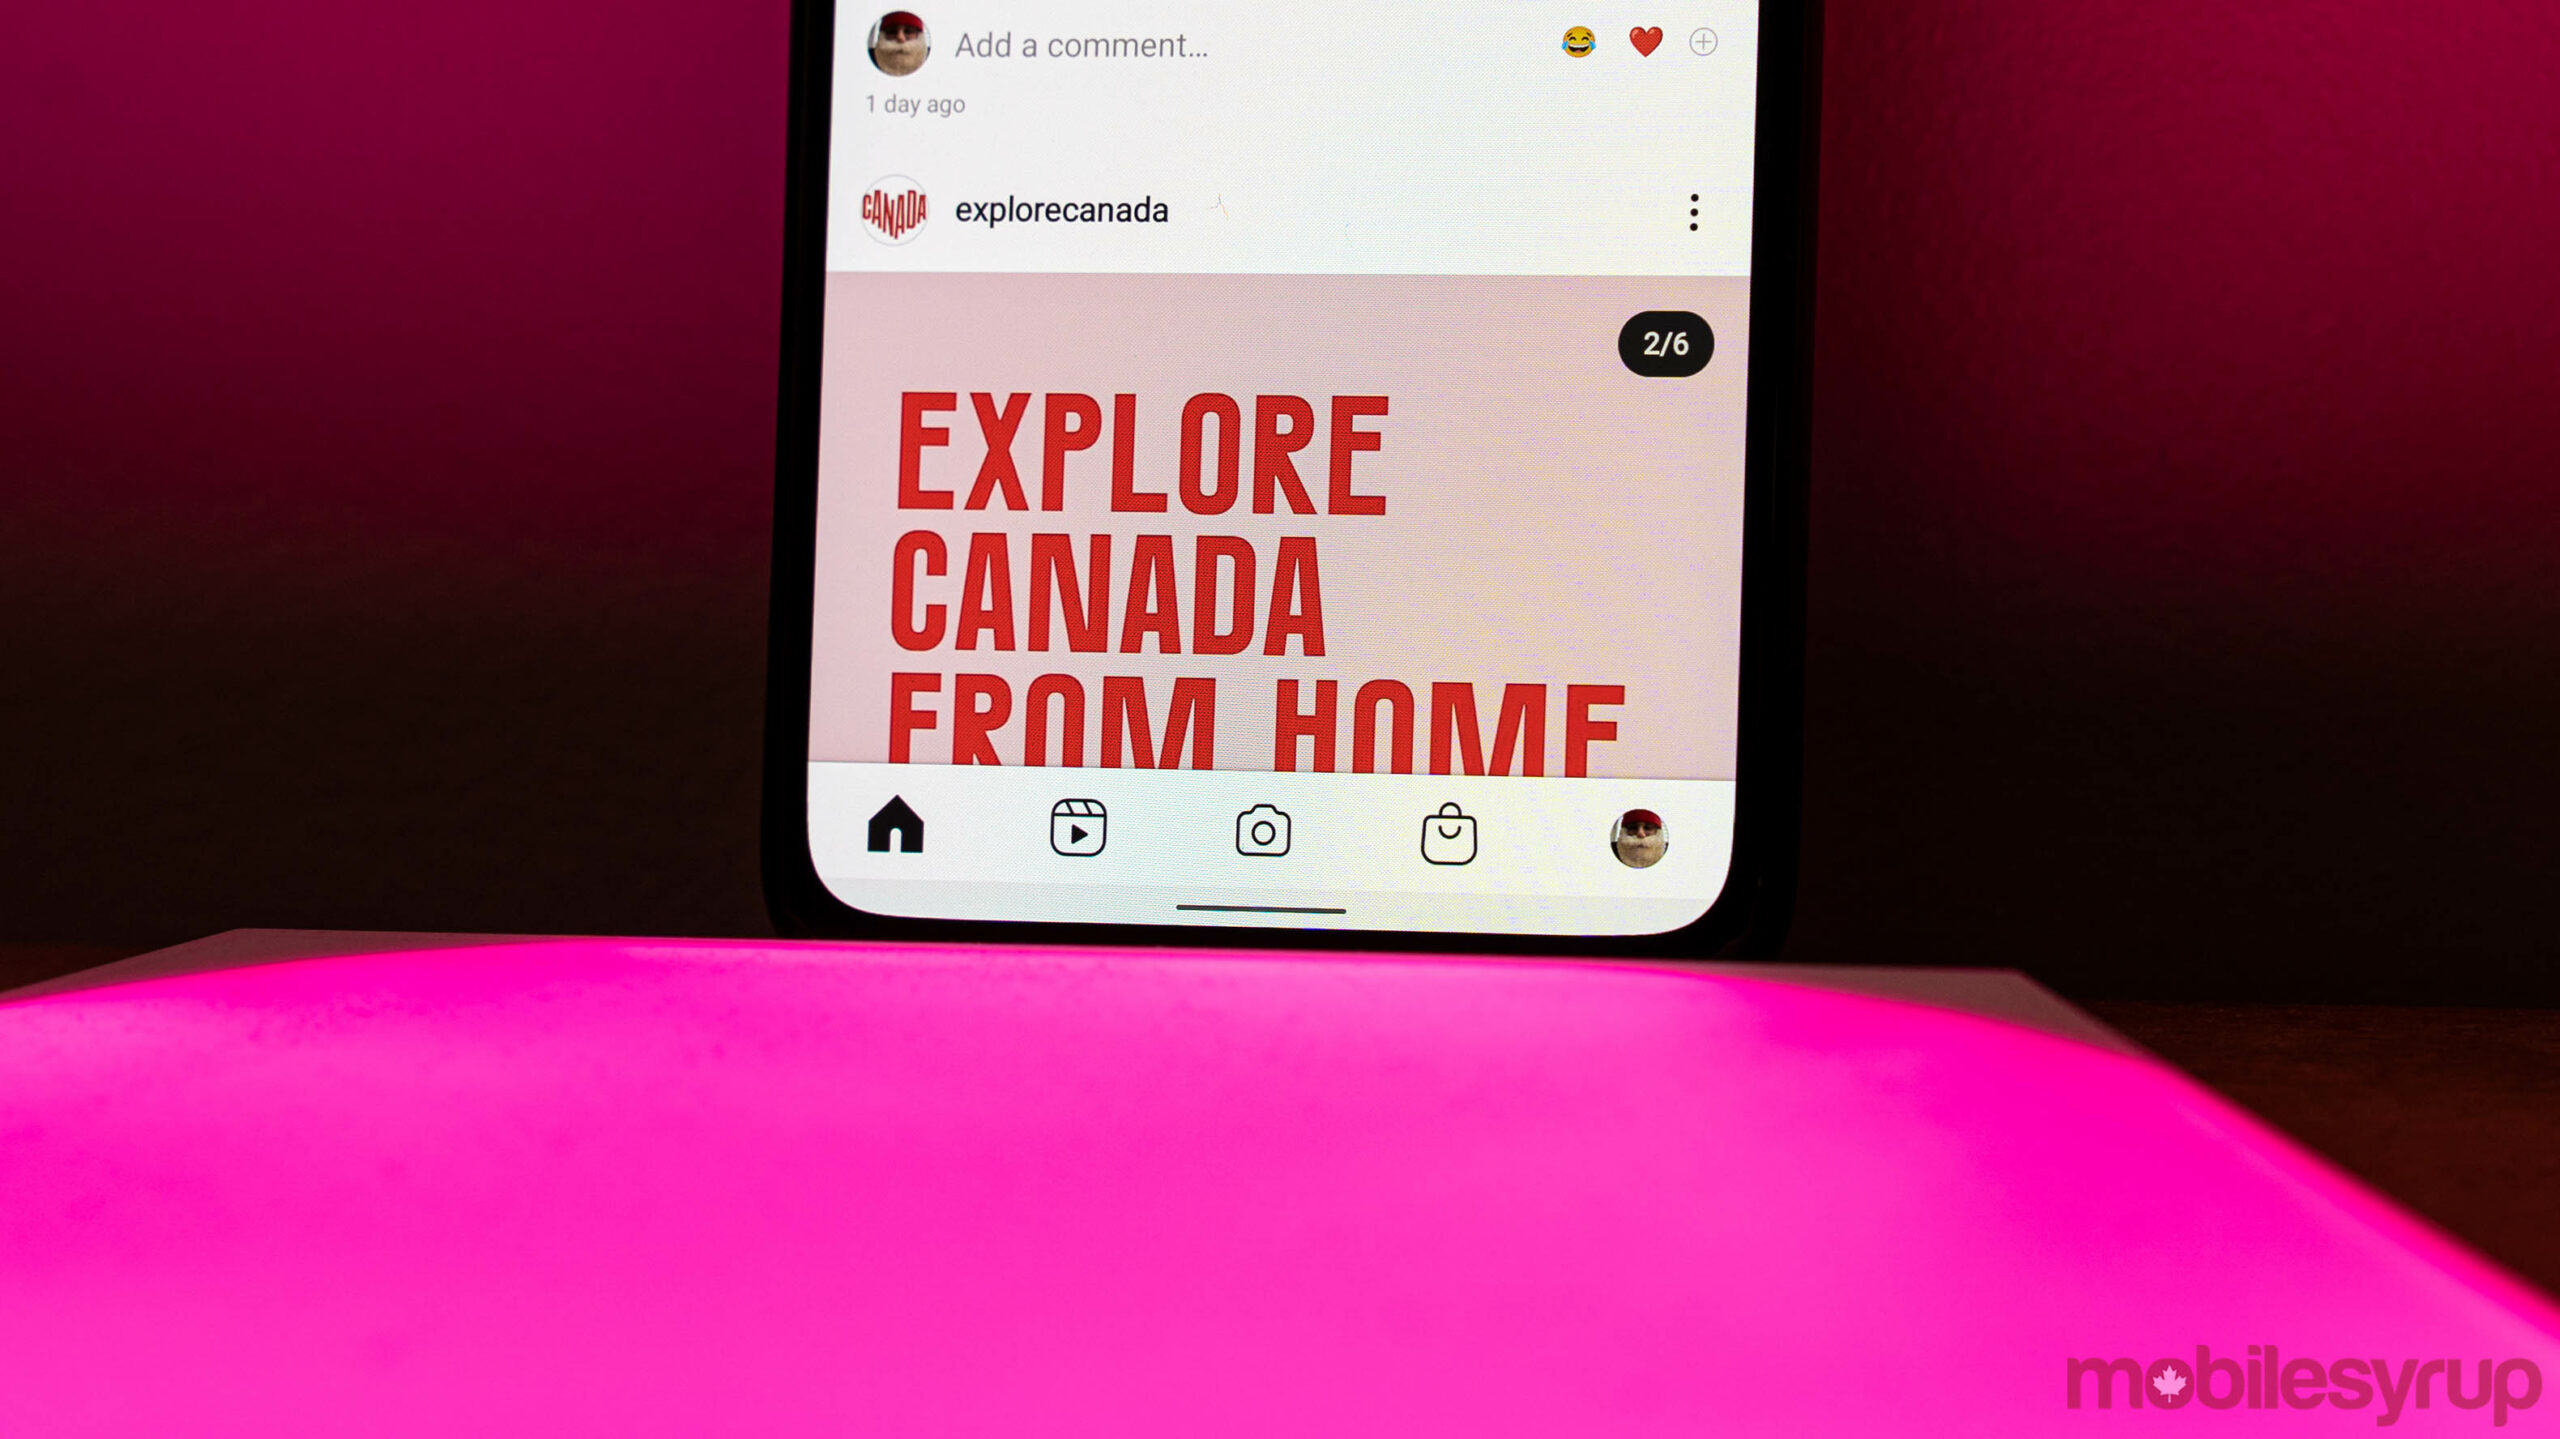 Instagram testing new app layout